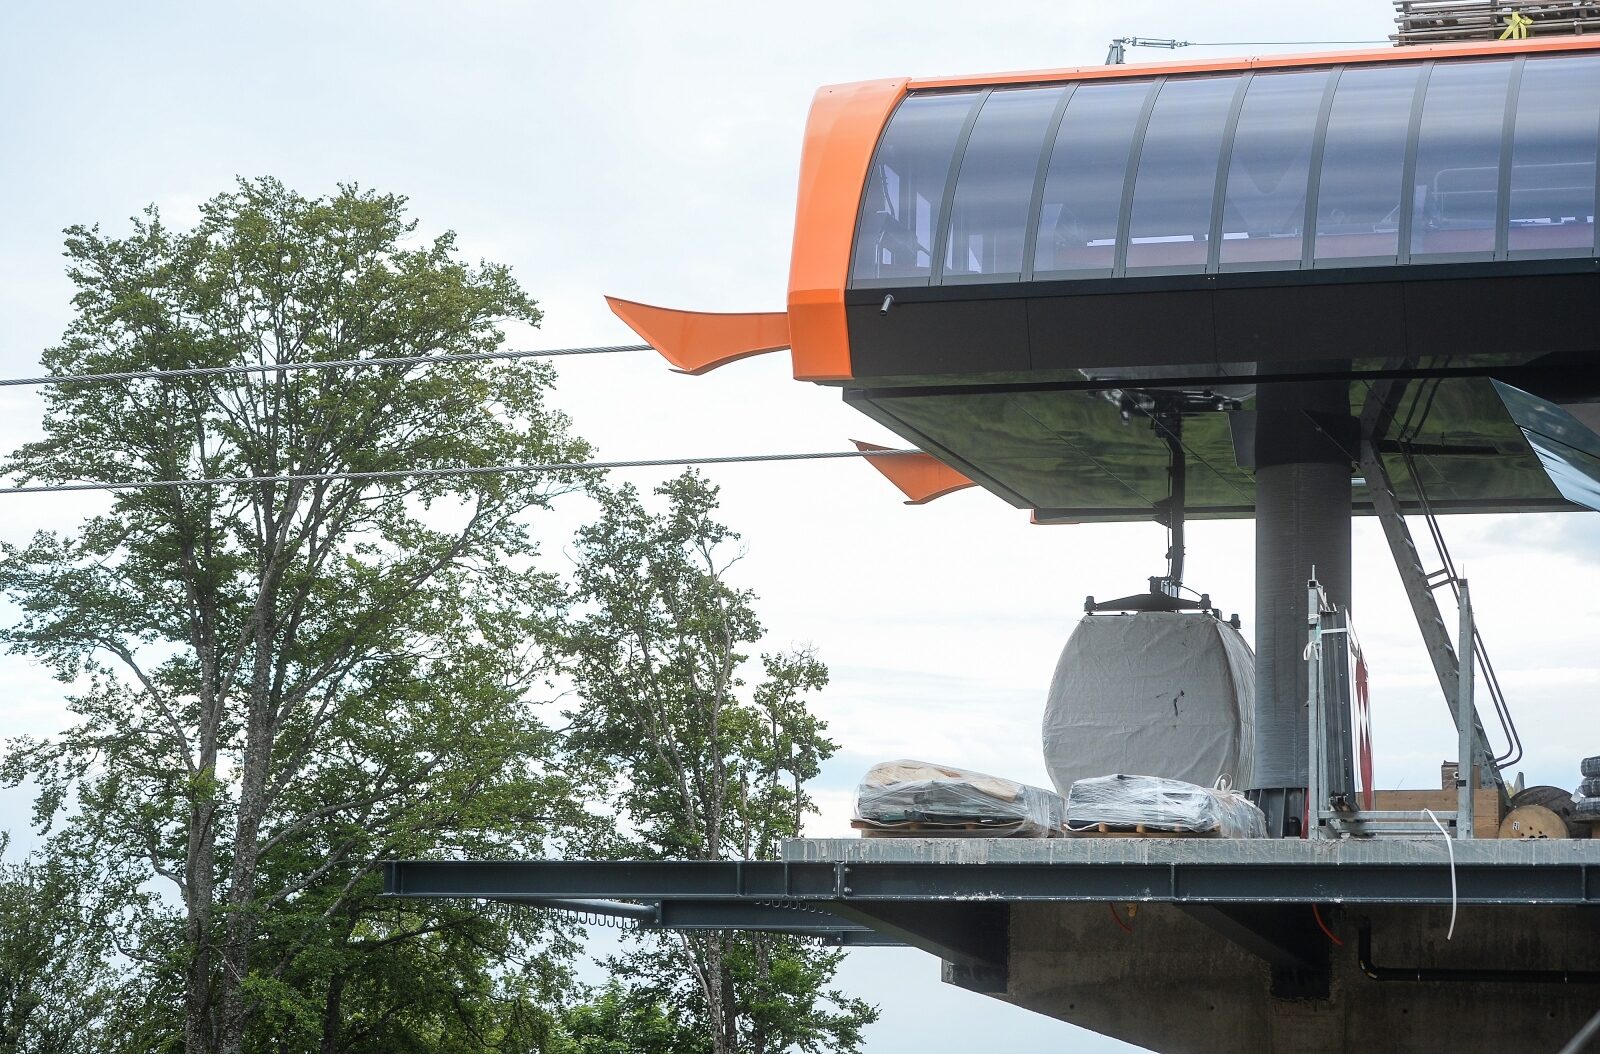 Jedna gondola od srednje stanice na Brestovcu stigla na vrh Medvednice